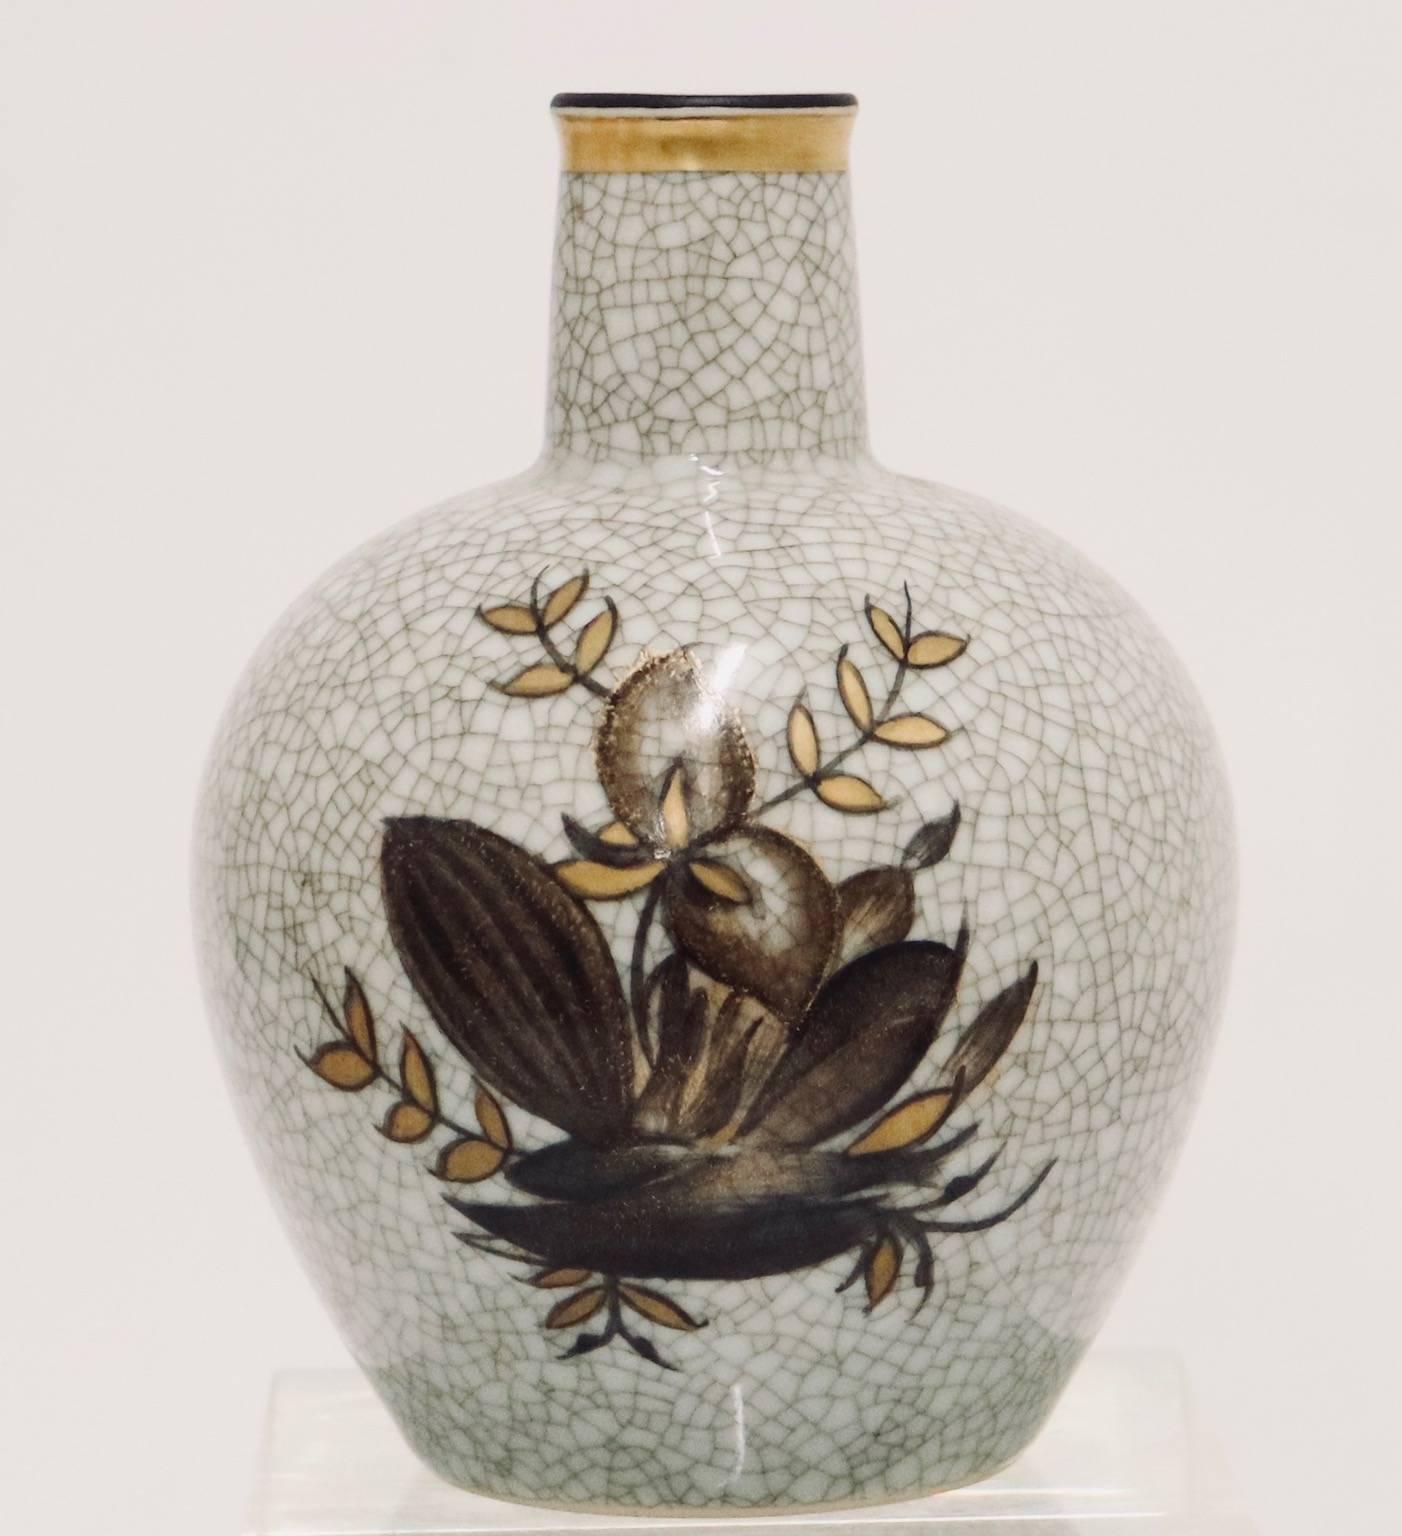 Danish Royal Copenhagen Midcentury Vases in Crackle Finish Porcelain, Signed 1